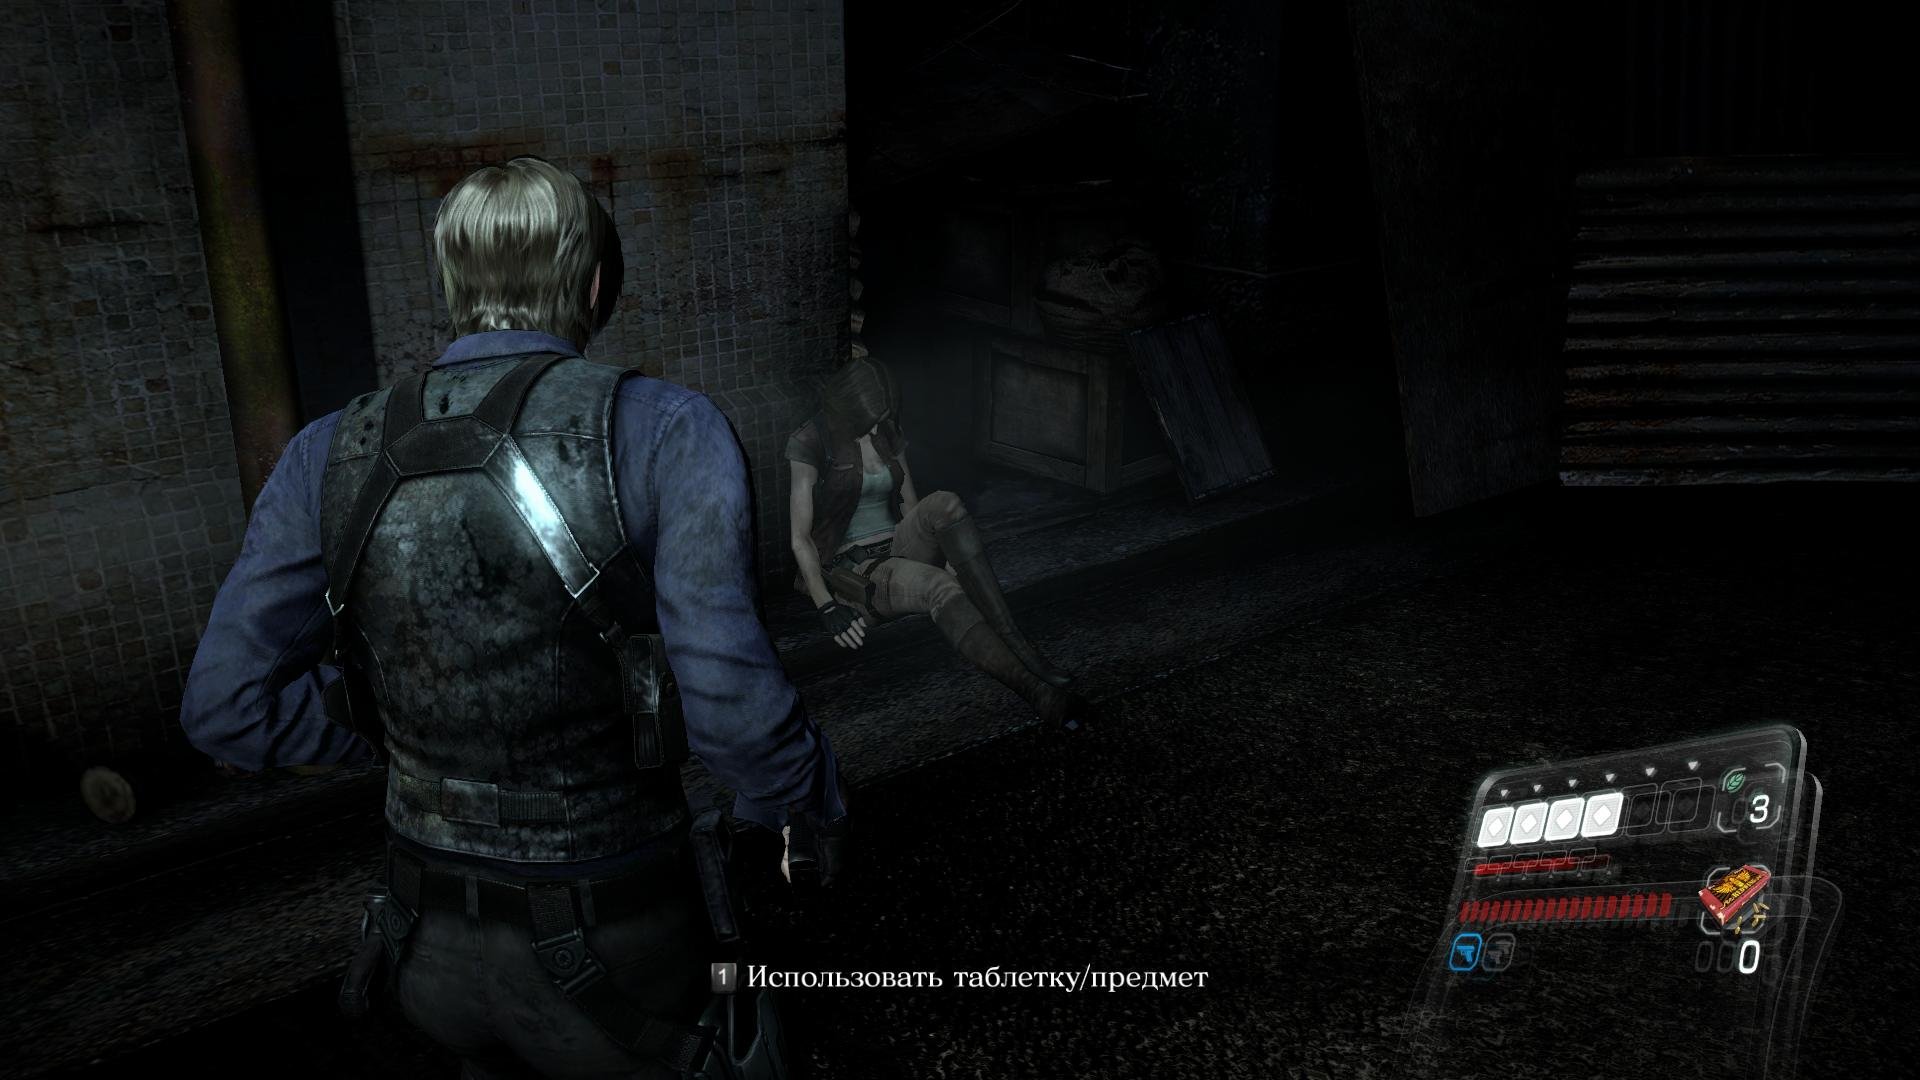 Скриншот 3 к игре Resident Evil 6 [v 1.1.0 build 10112070 + DLCs] (2013) RePack от Decepticon